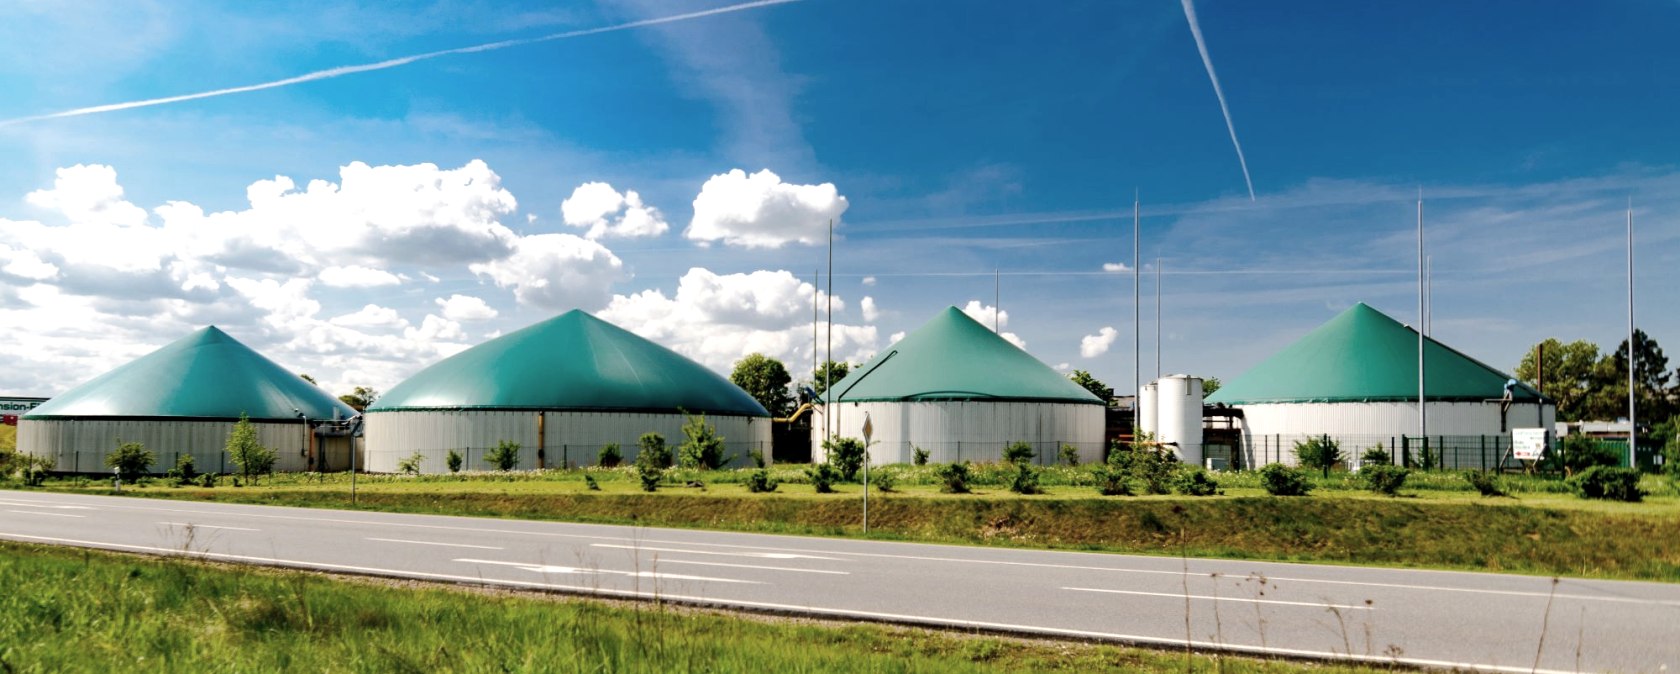 Biogasanlage, © Adobe Stock